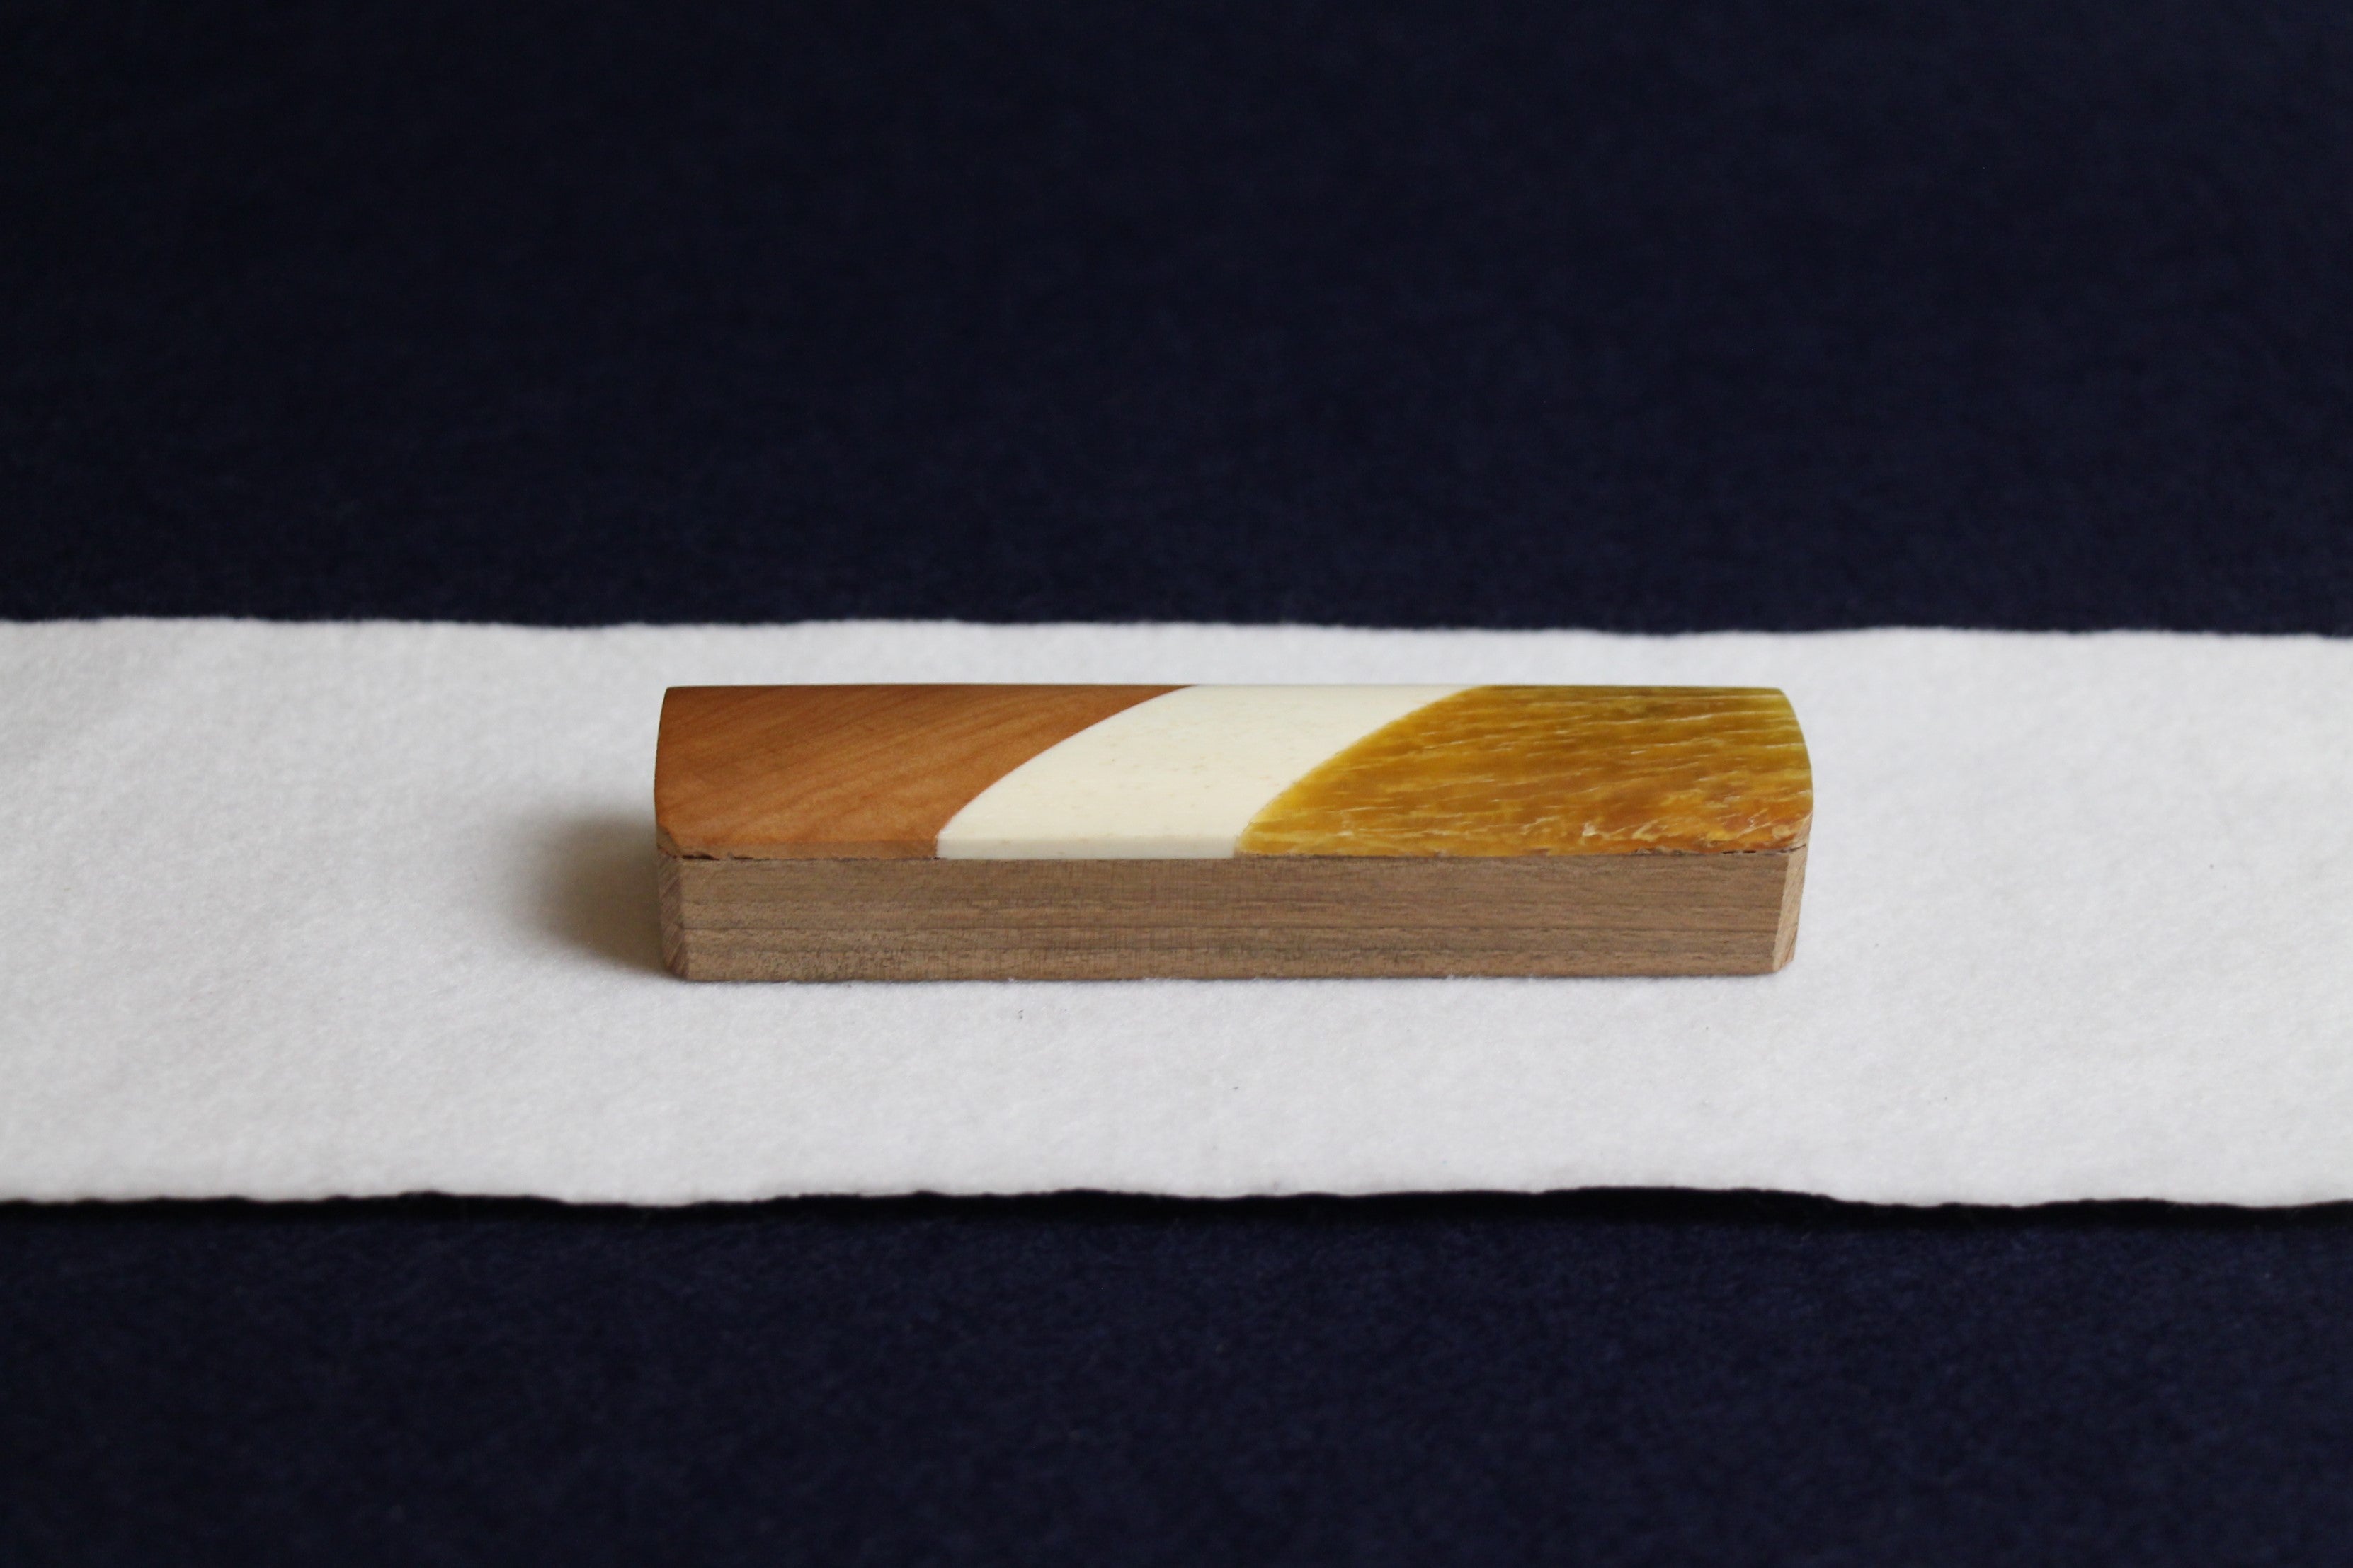 Horn, wood and bone 3 colour makta block with sanding paper